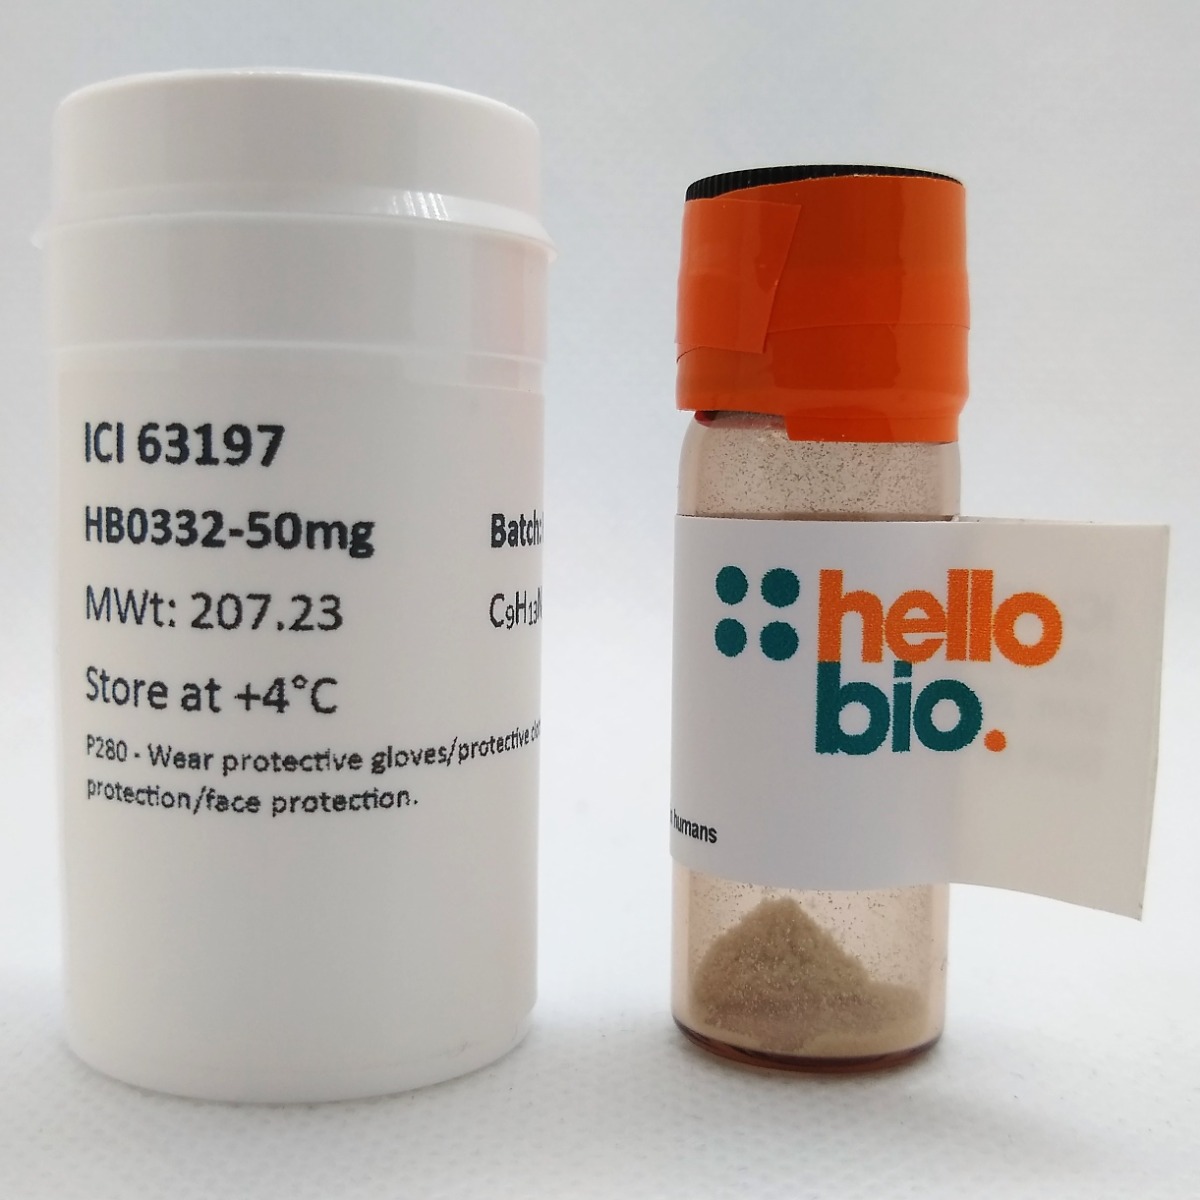 ICI 63197 product vial image | Hello Bio